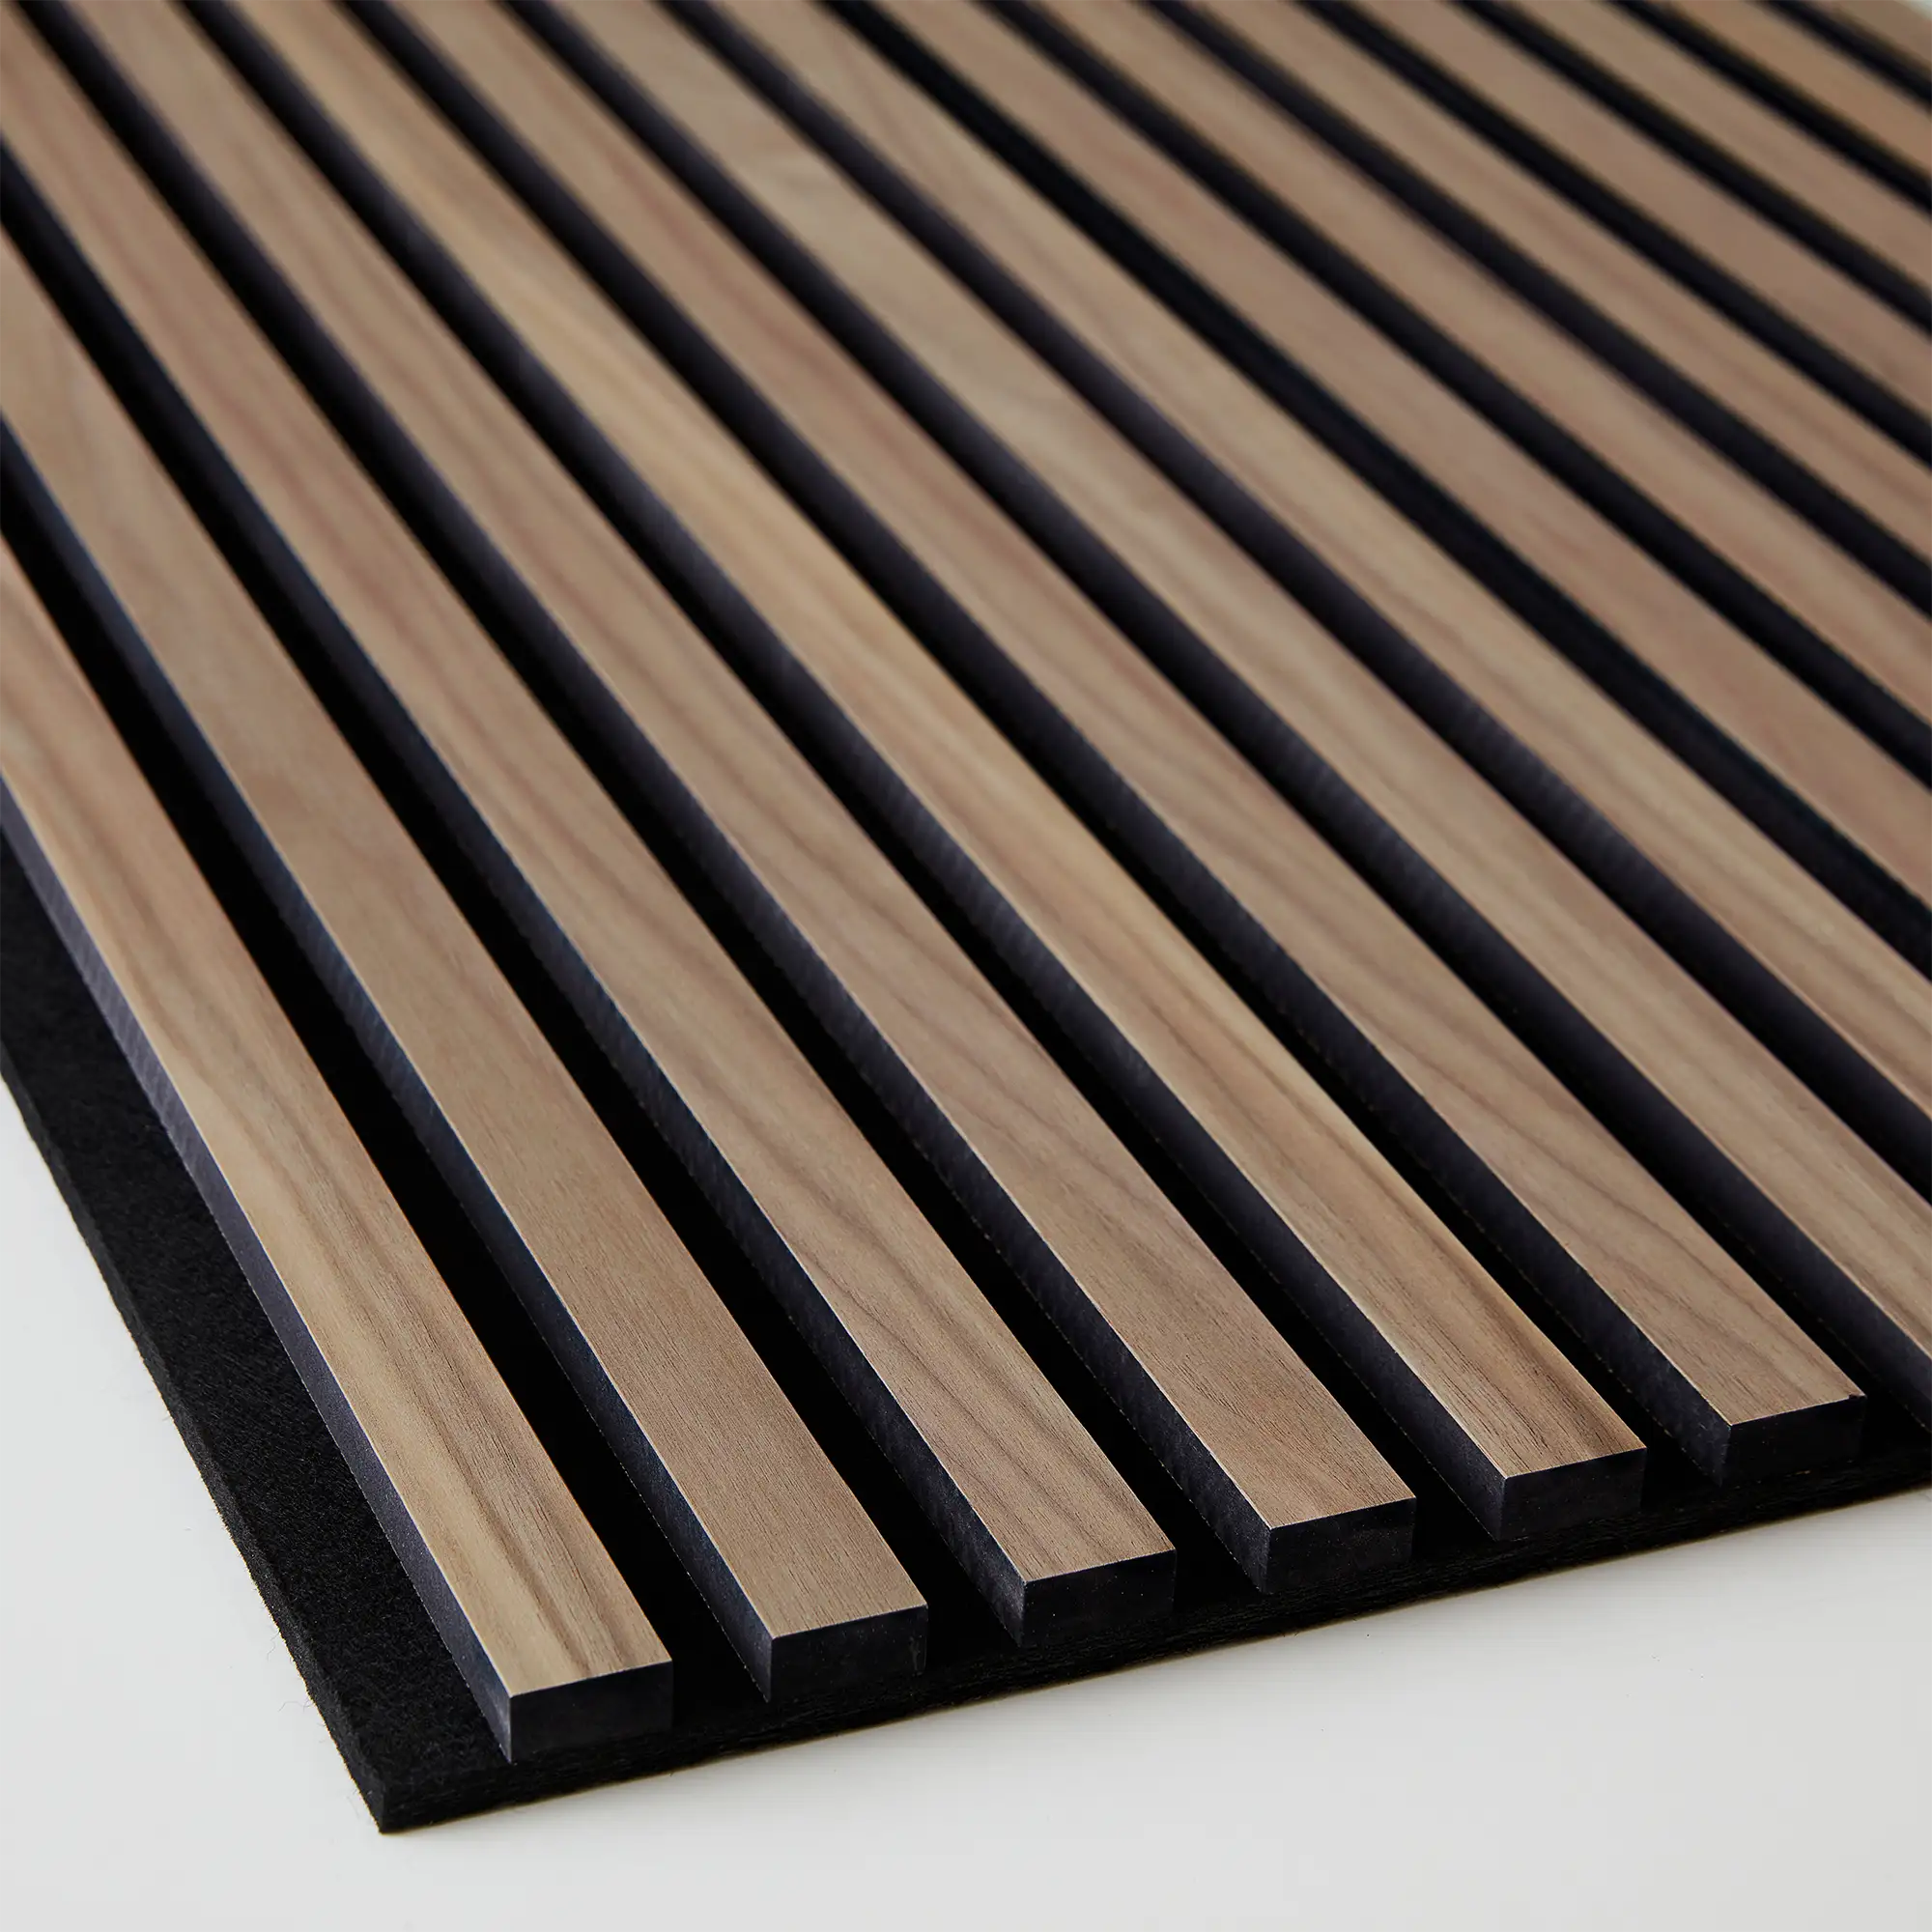 Slatted Wood Wallpaper Walnut - Threshold™